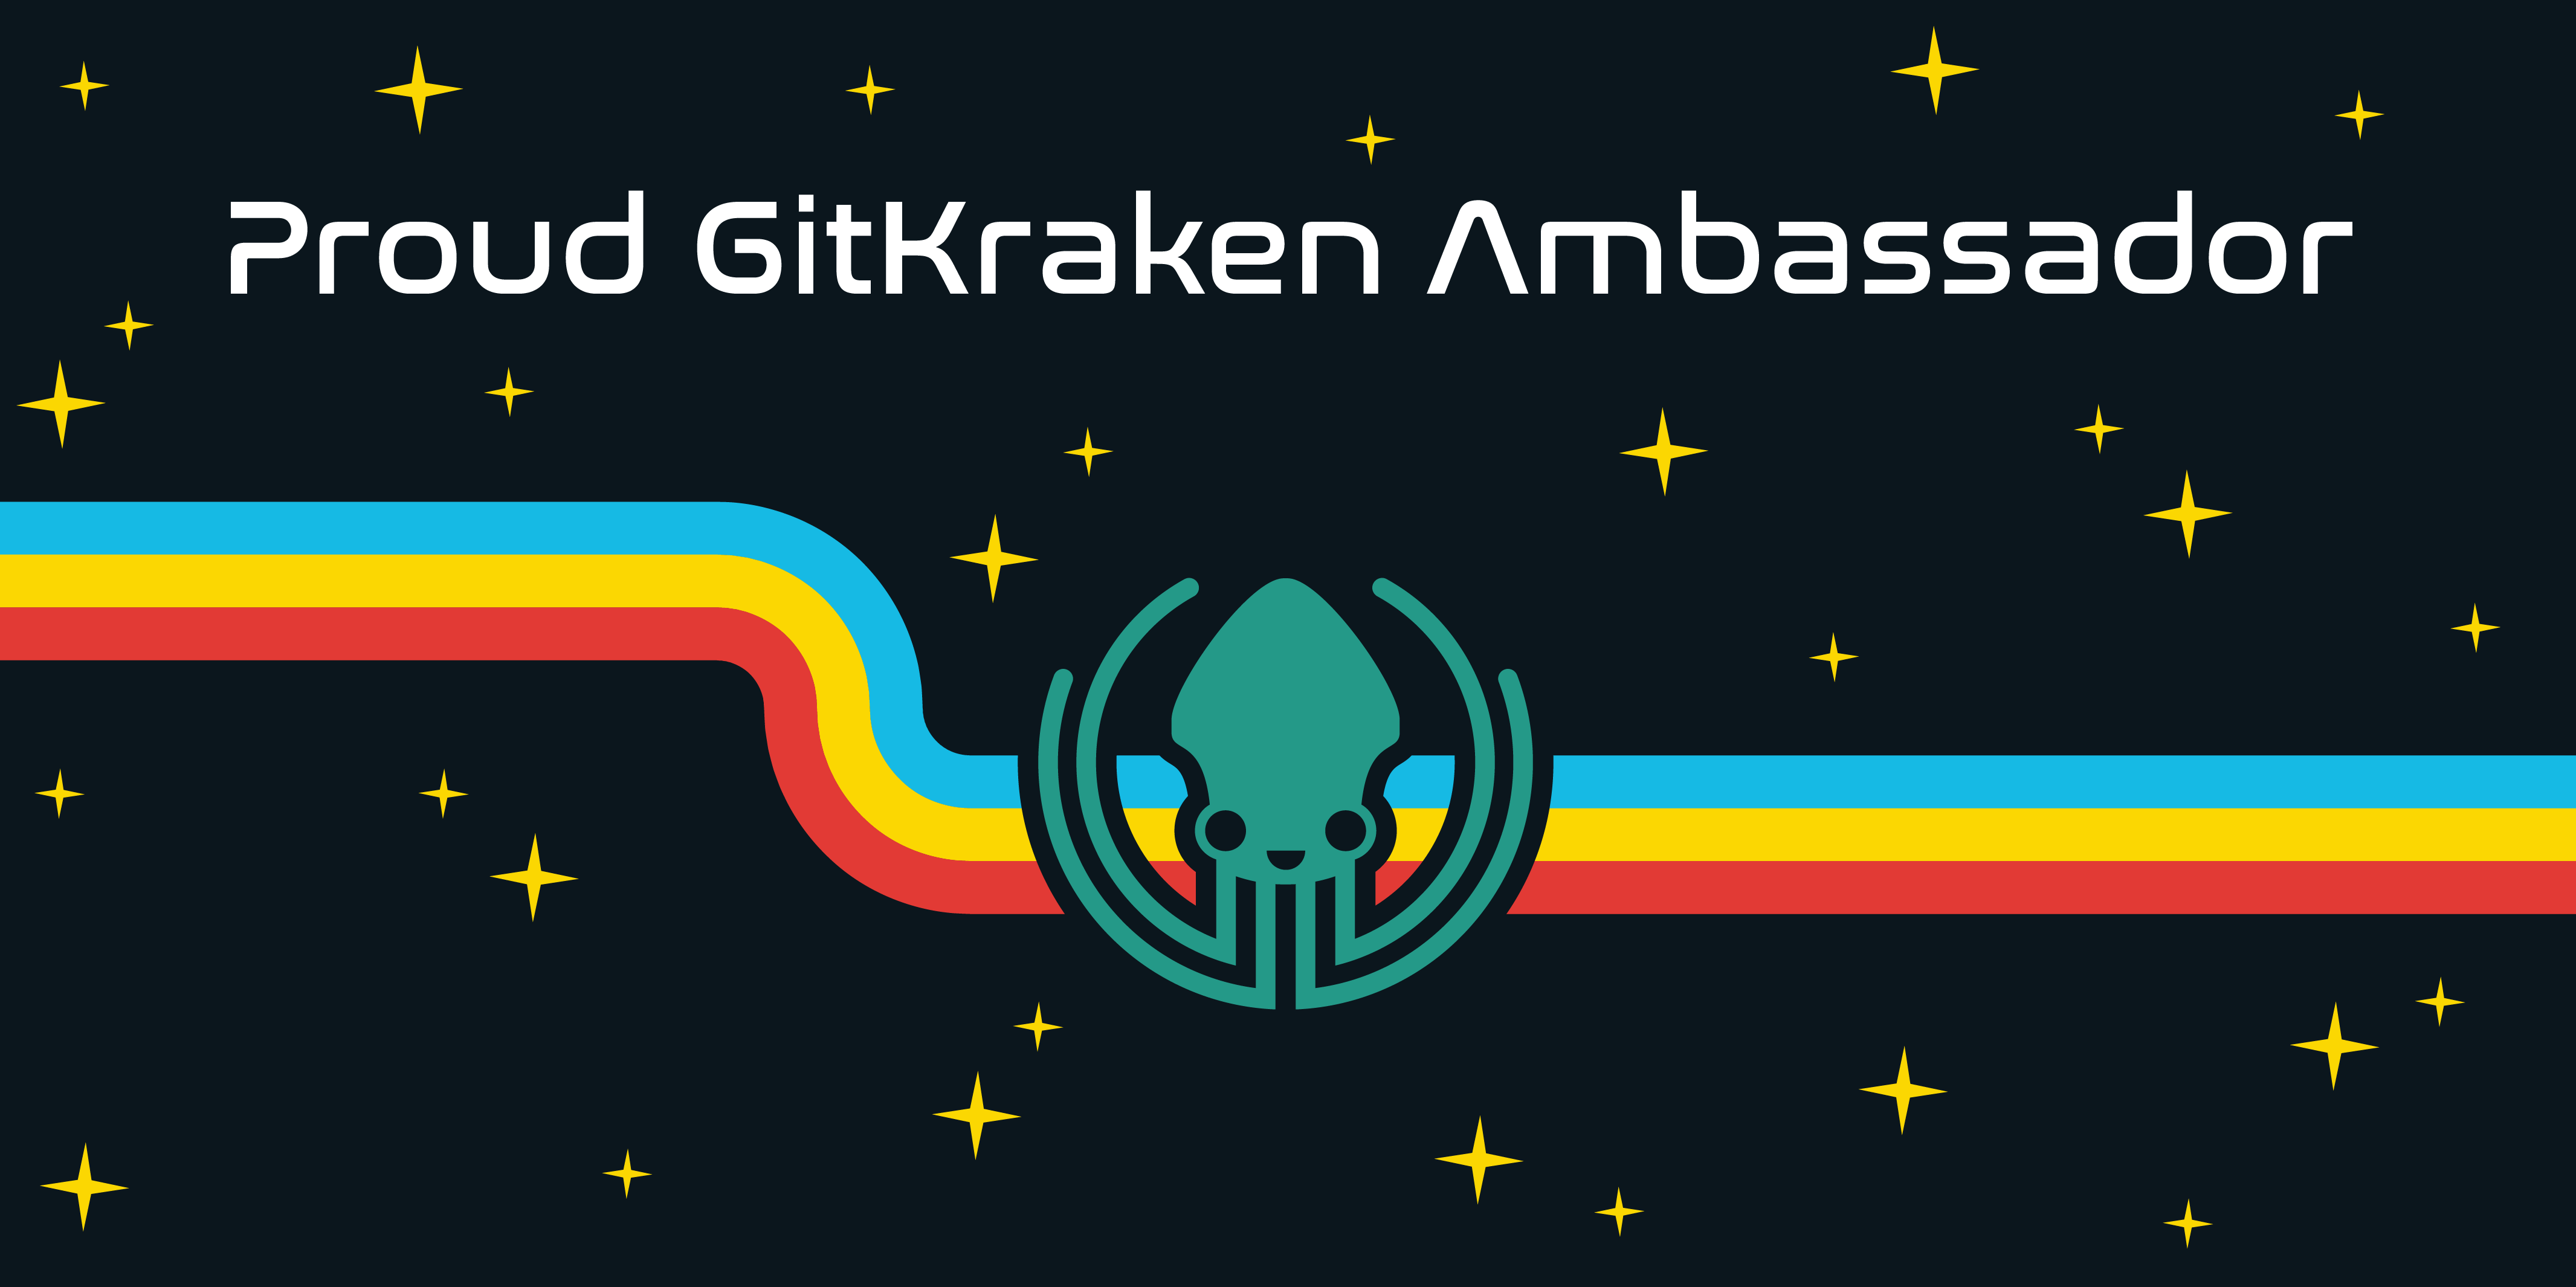 ¡Soy GitKraken Ambassador!